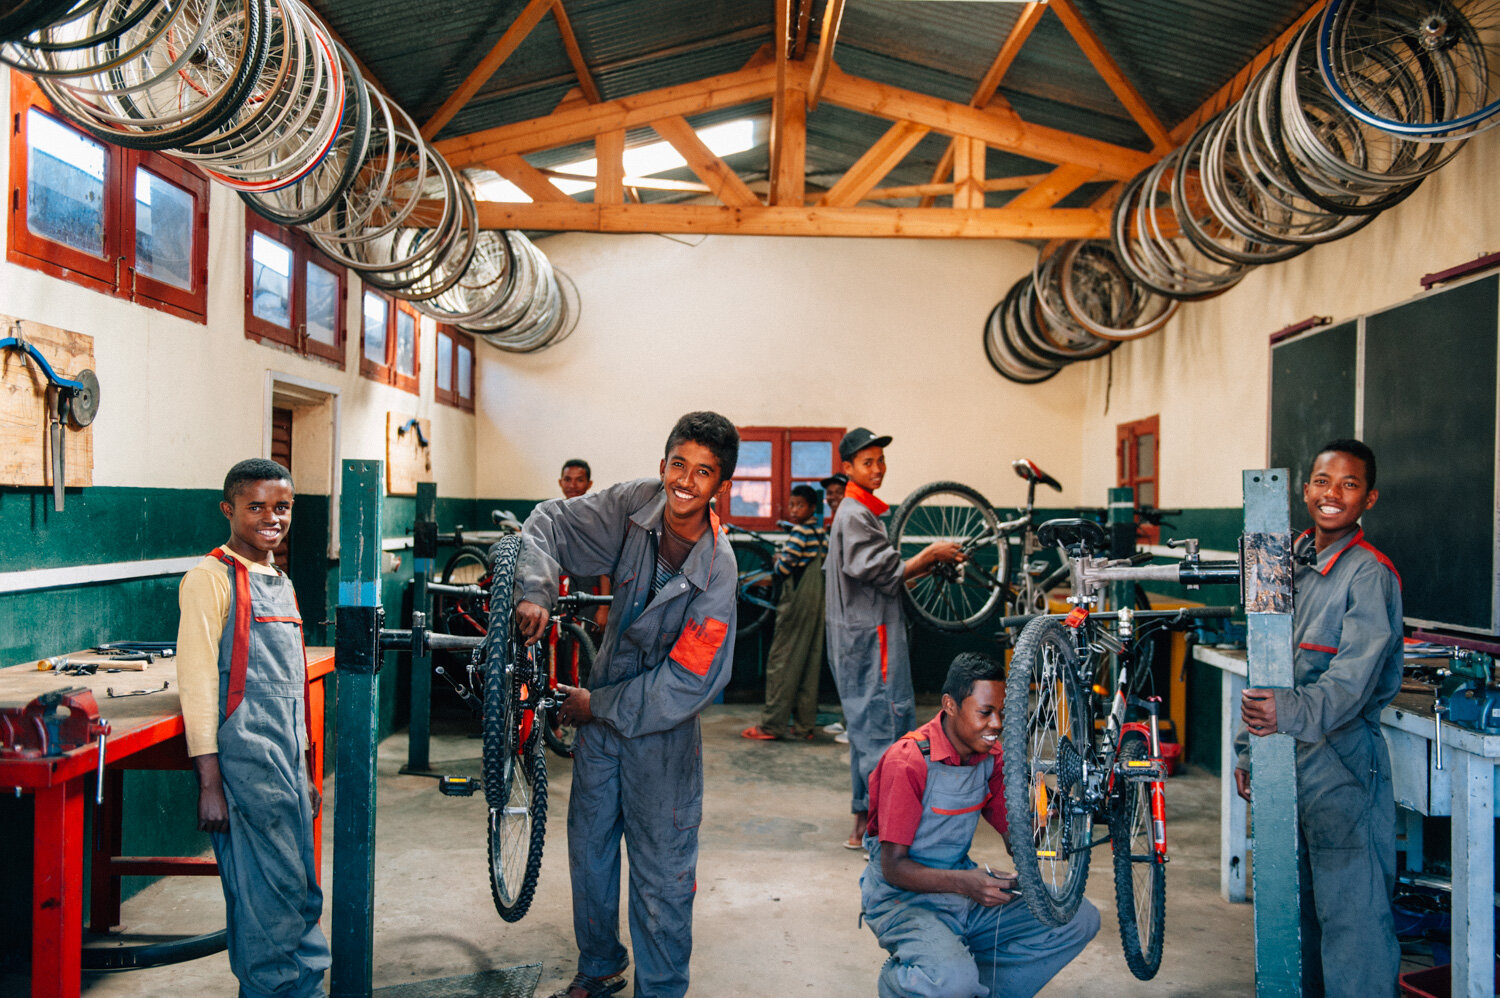  Enfants des rues. Formation professionnelle mécanique vélo. Antsirabe. Avril 2018 // Street children. Professional mechanical bicycle training. Antsirabe. April 2018. 